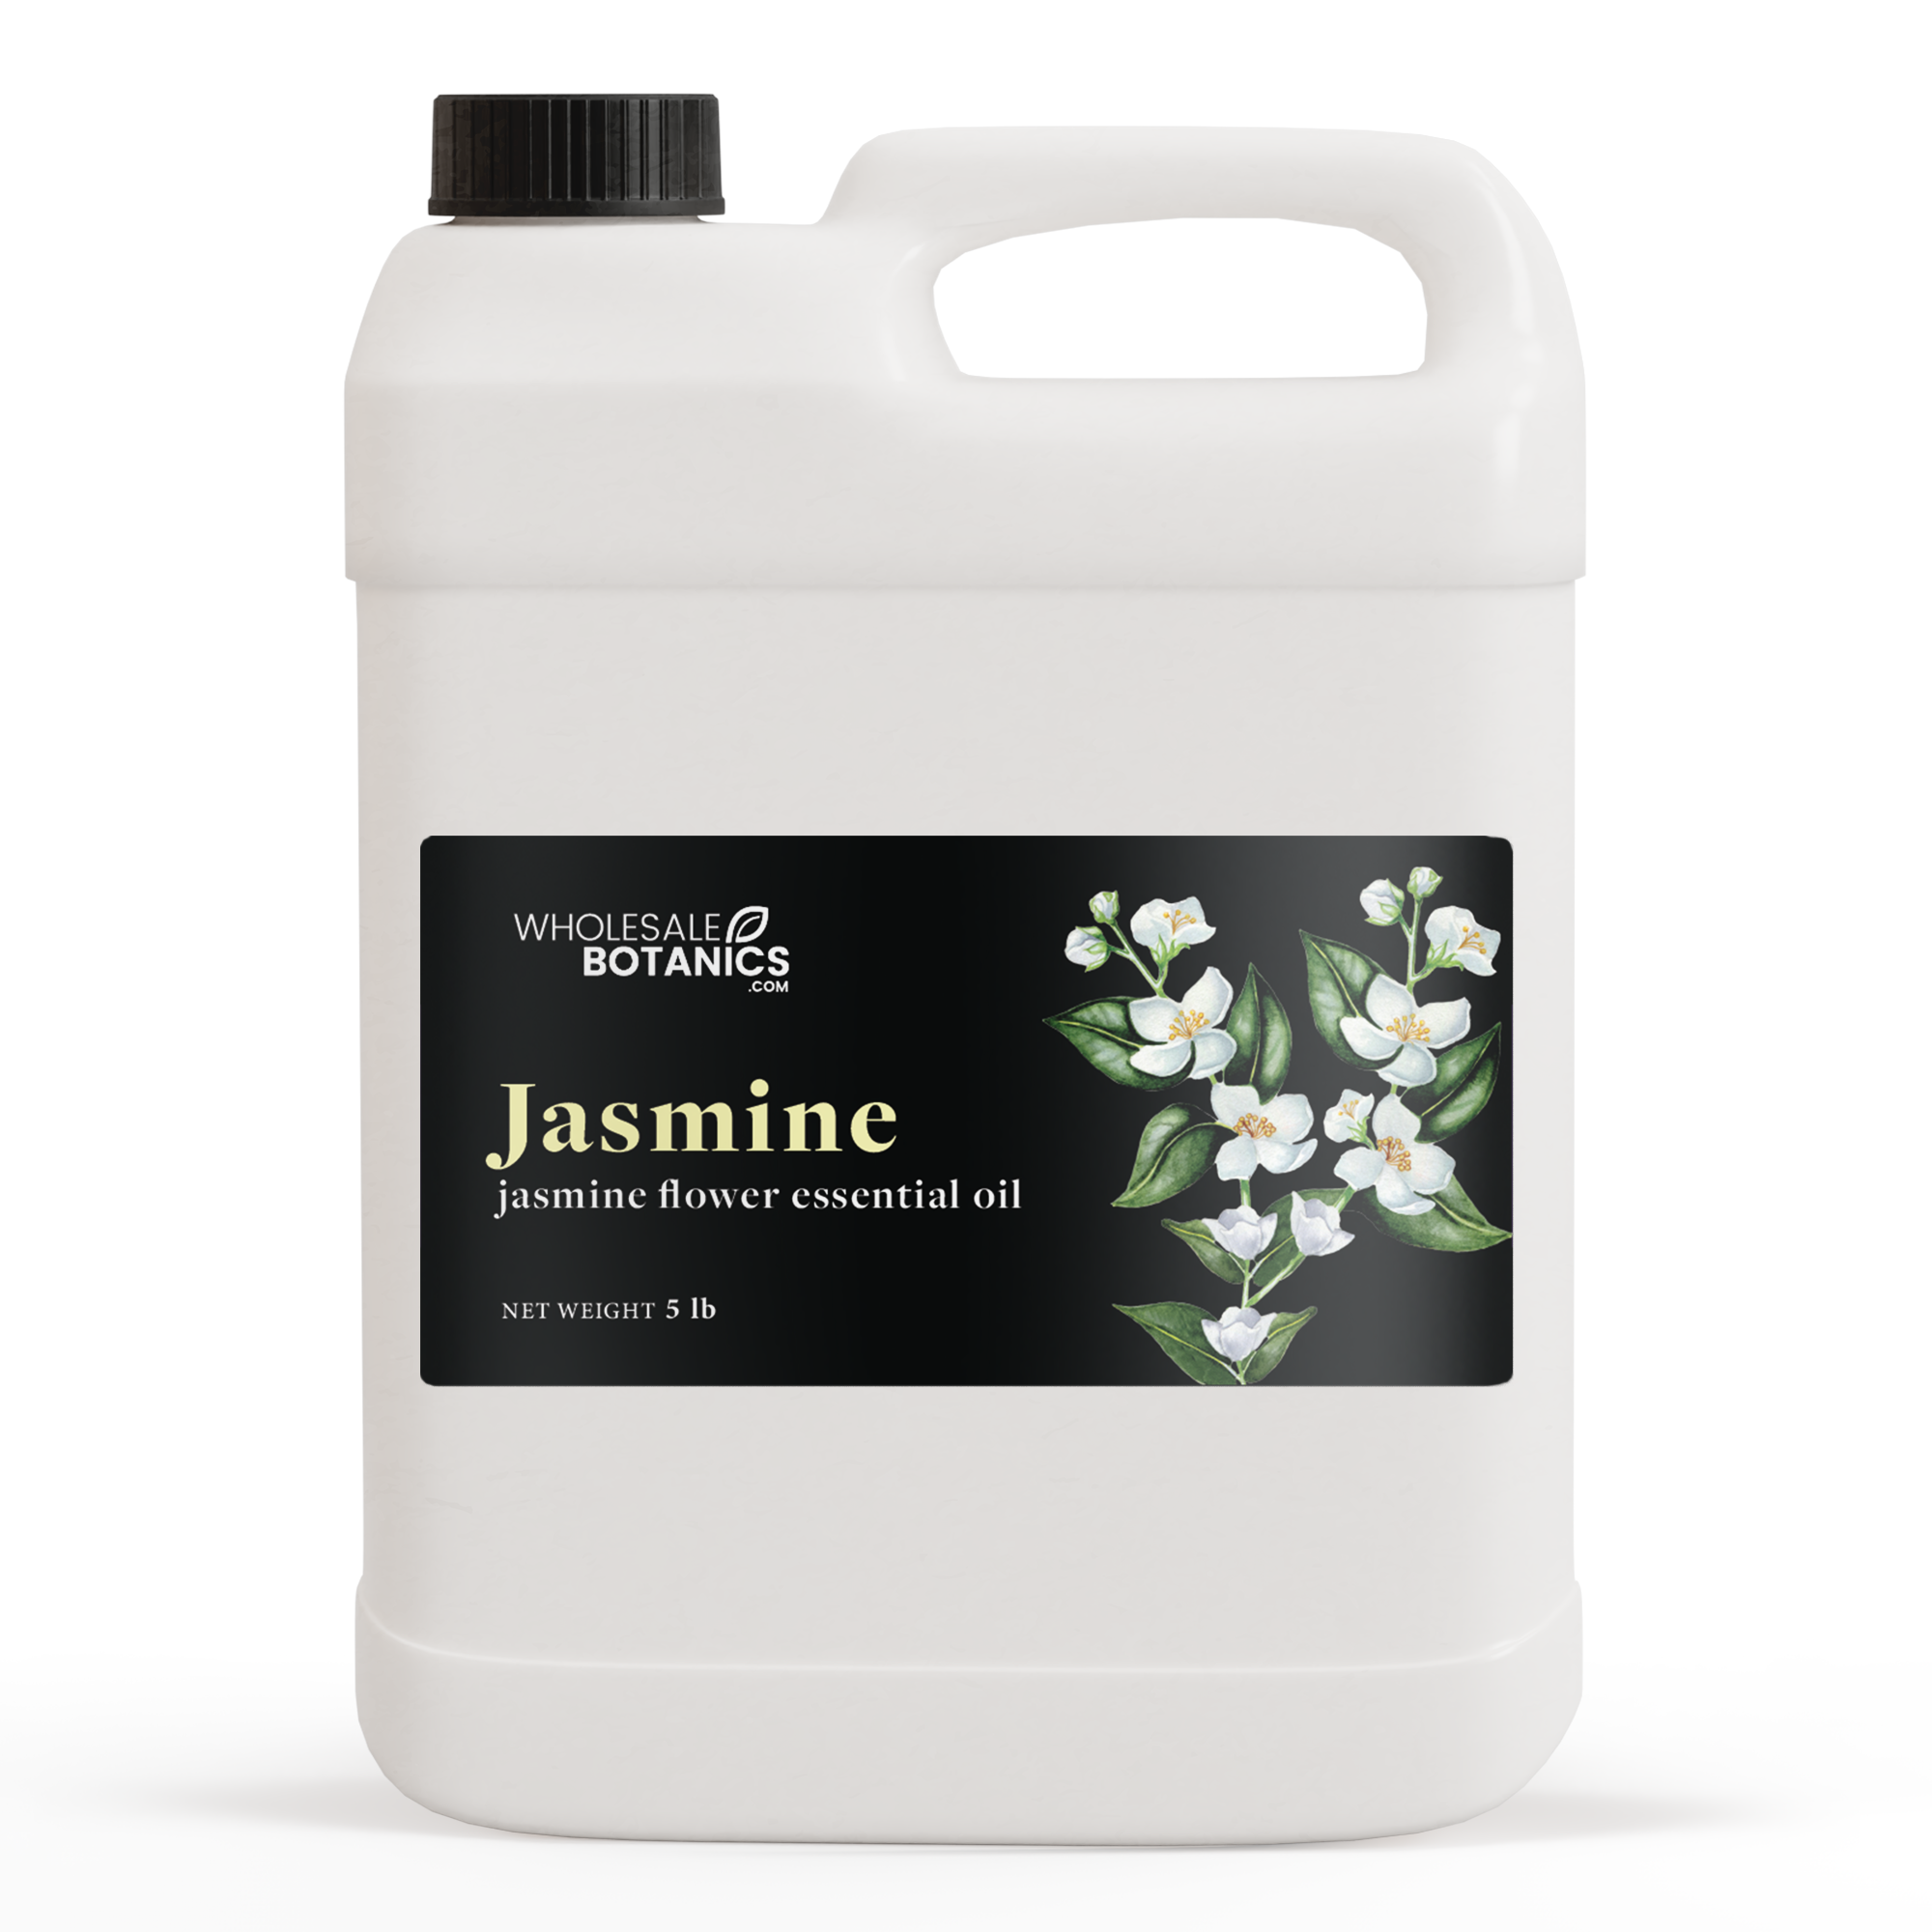 Buy Online Jasmine Essential Oil at Low Price